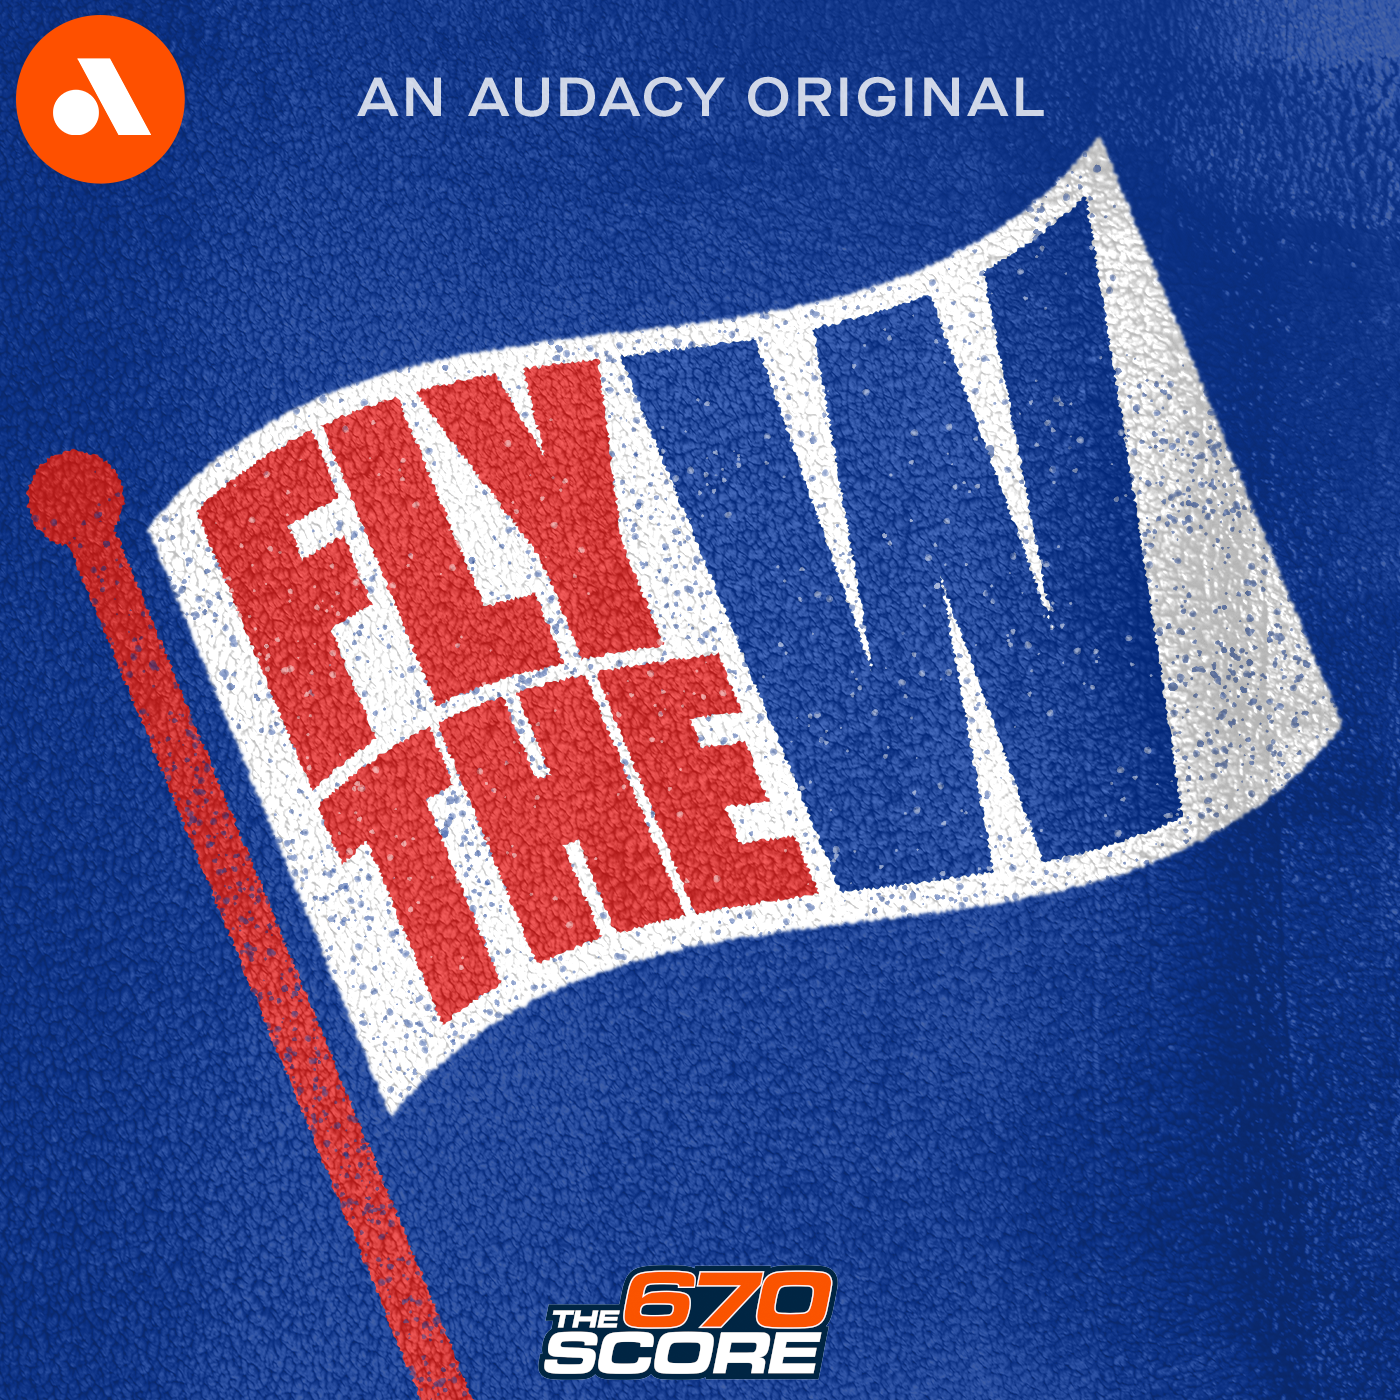 BONUS: Crawly Interviews Former Pitcher Tim Dillard For a Brewers Lowdown | 'Fly the W'